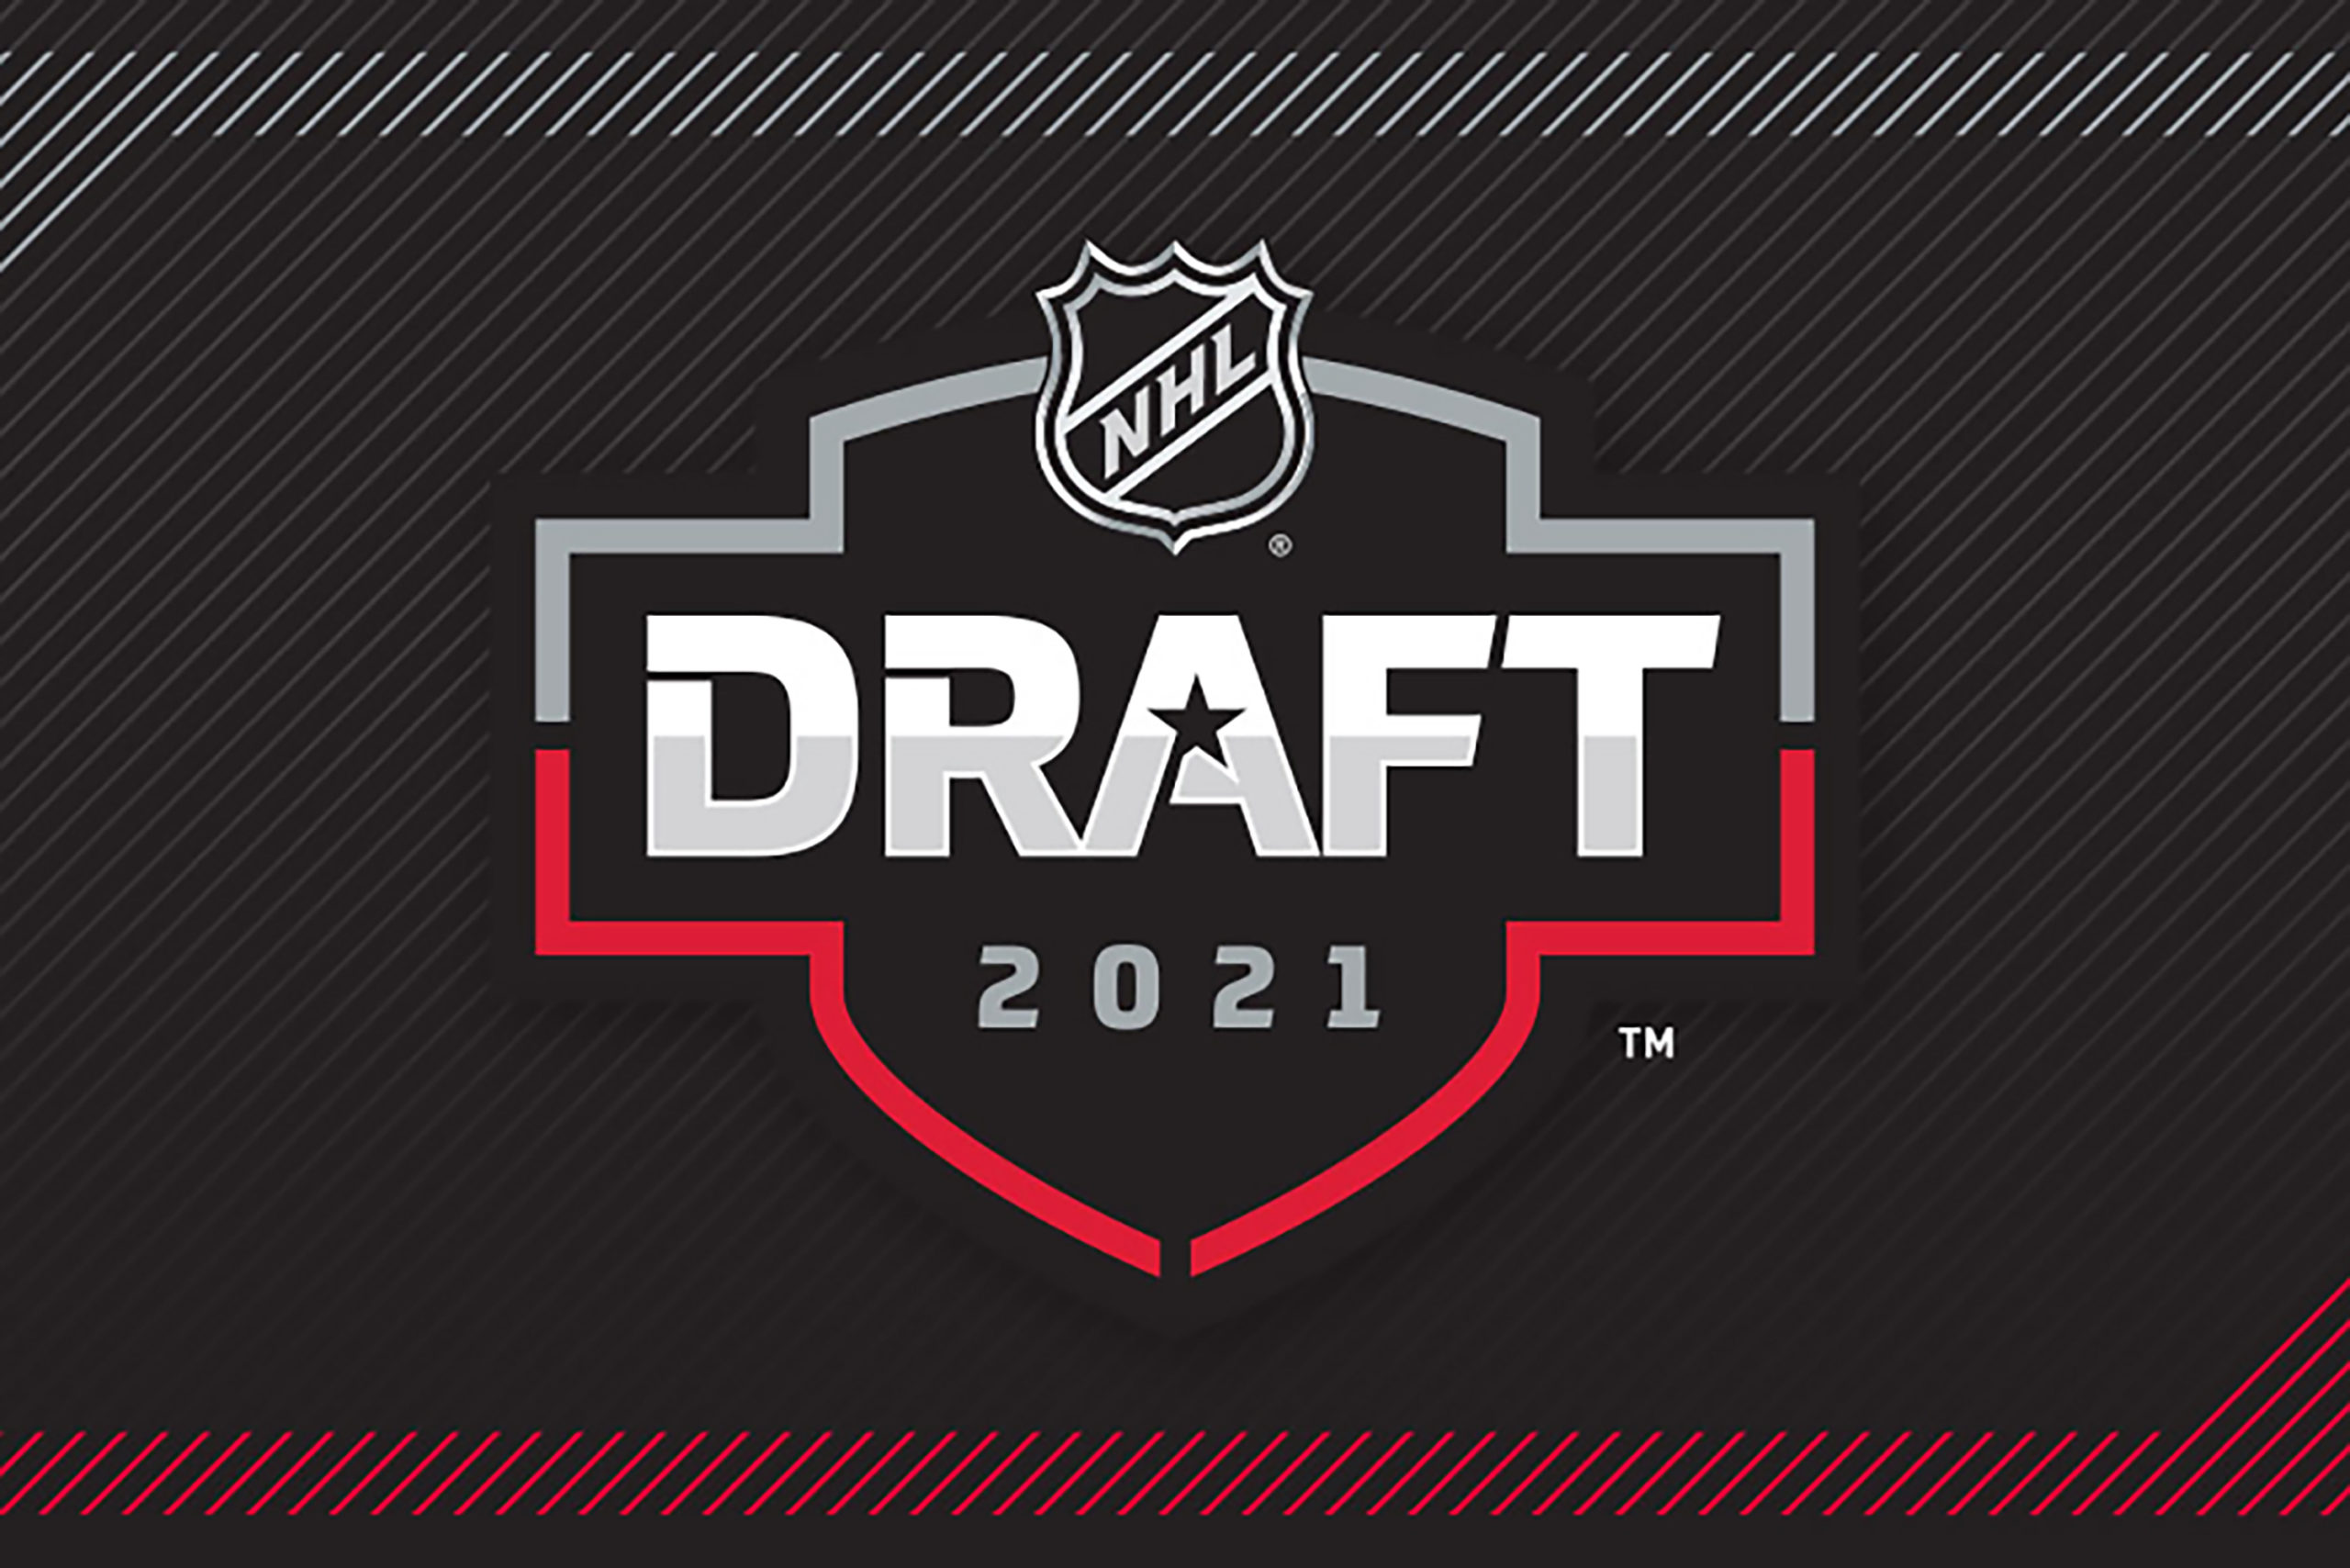 The 2021 NHL Draft starts on July 23.